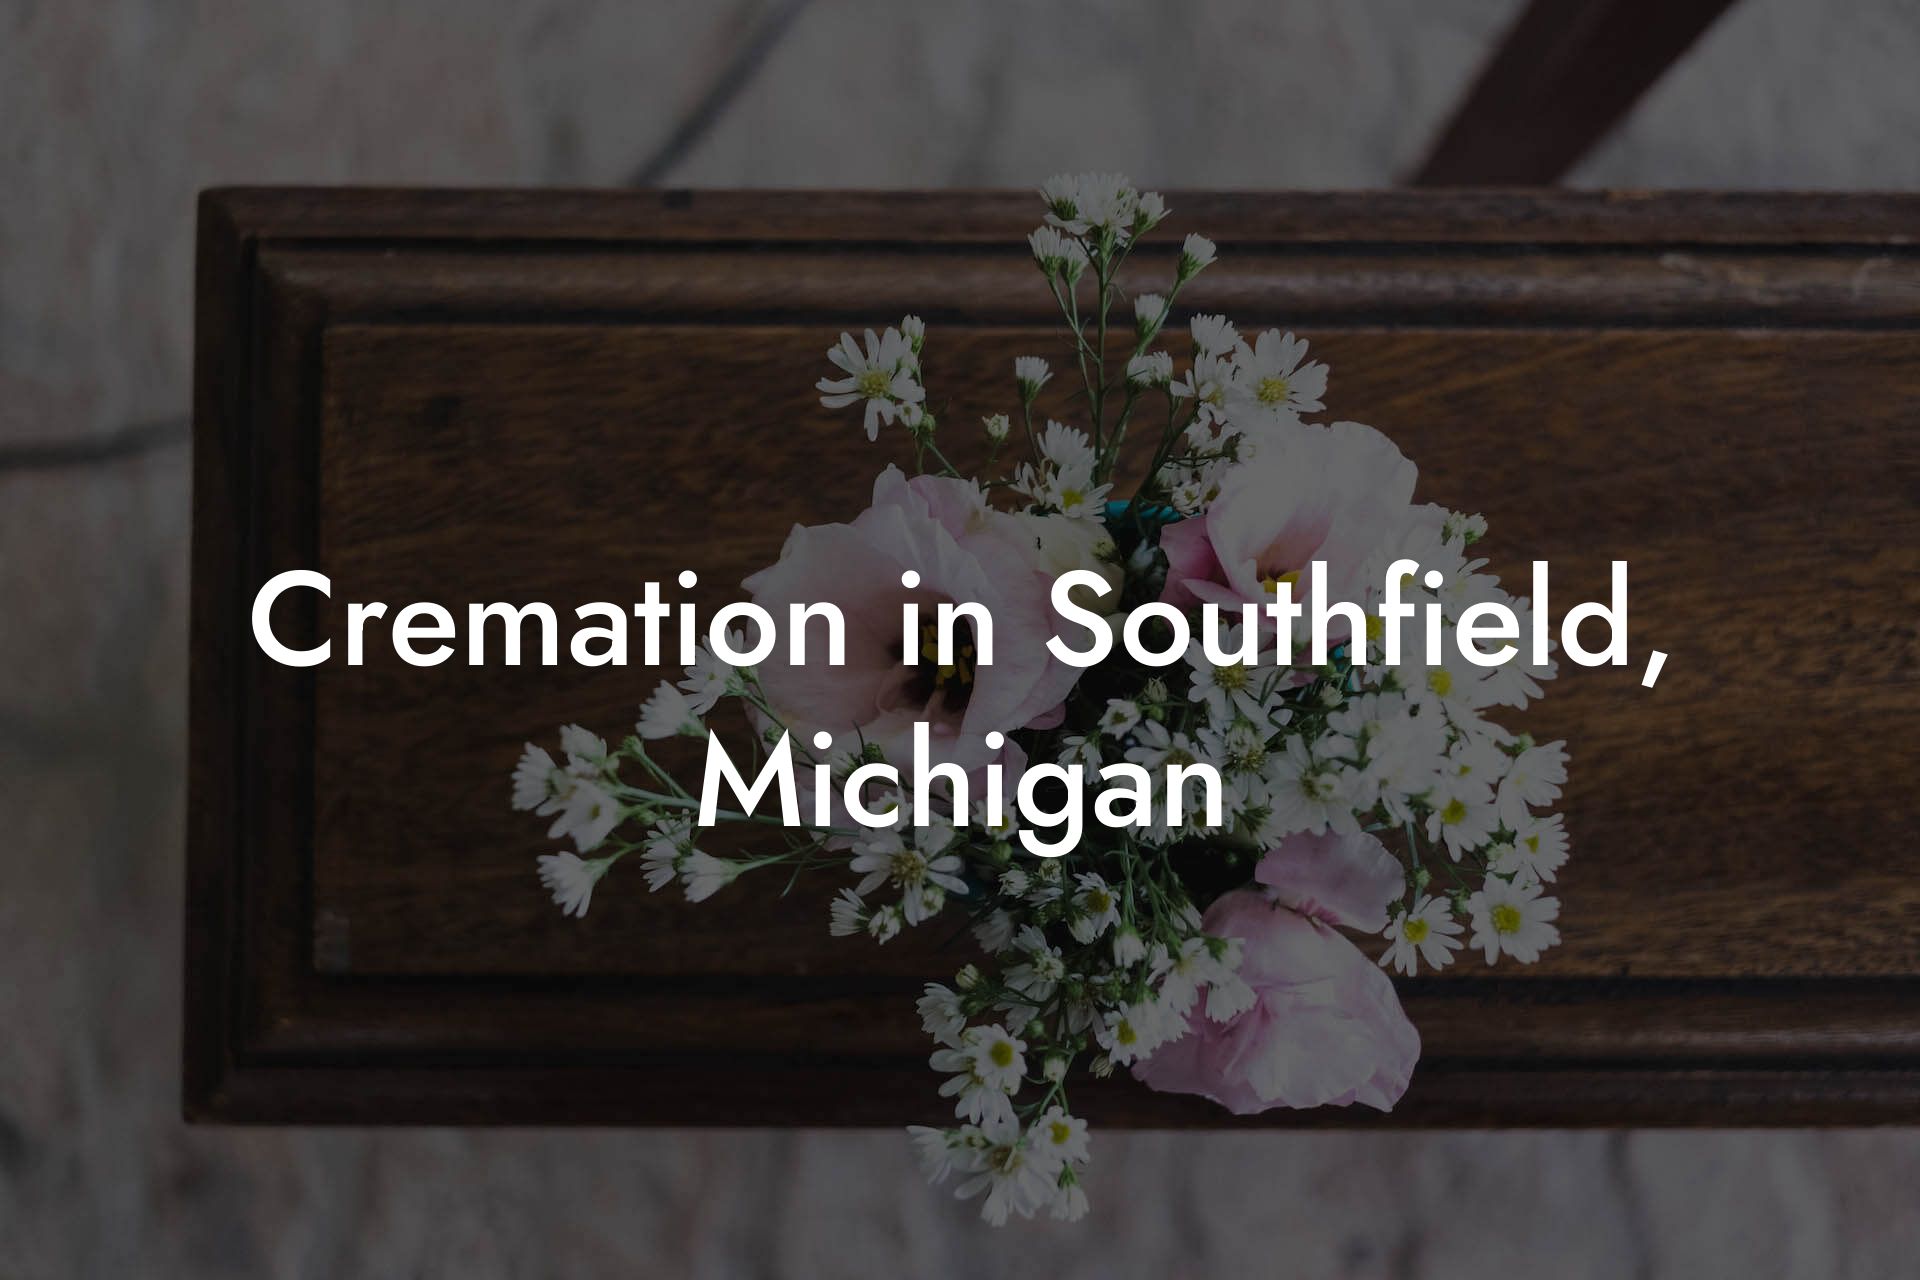 Cremation in Southfield, Michigan